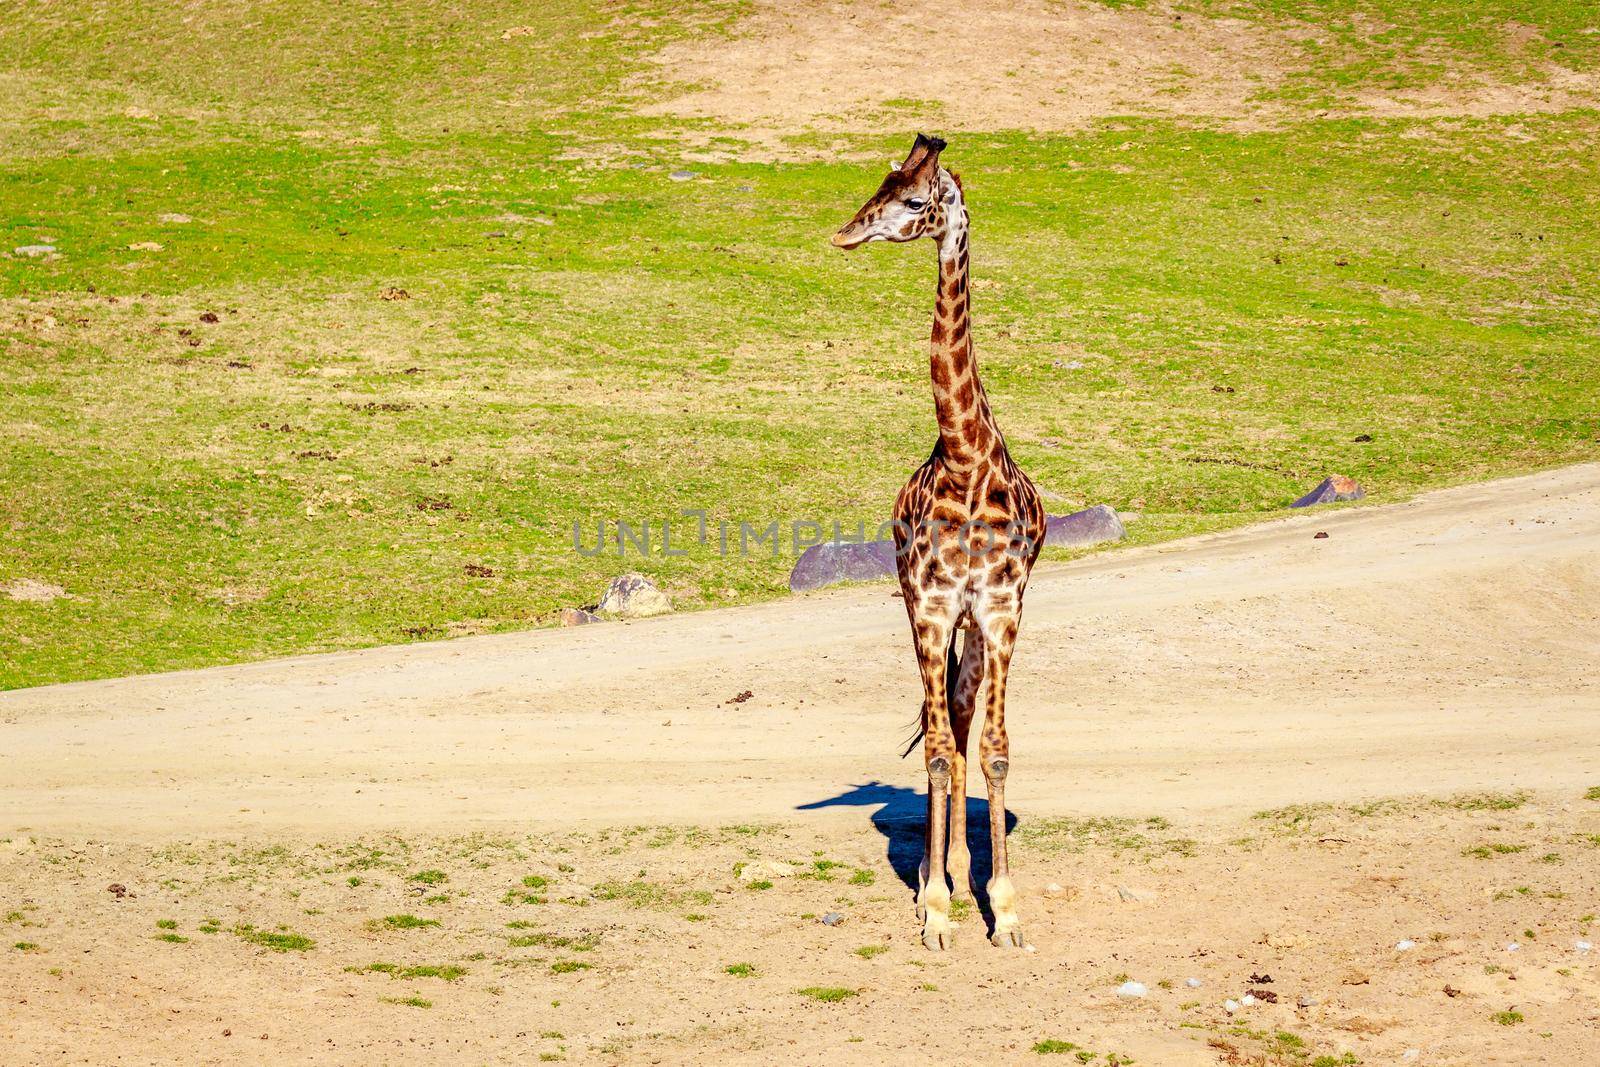 A Giraffe walking through the grasslands, under the harsh sunshine.